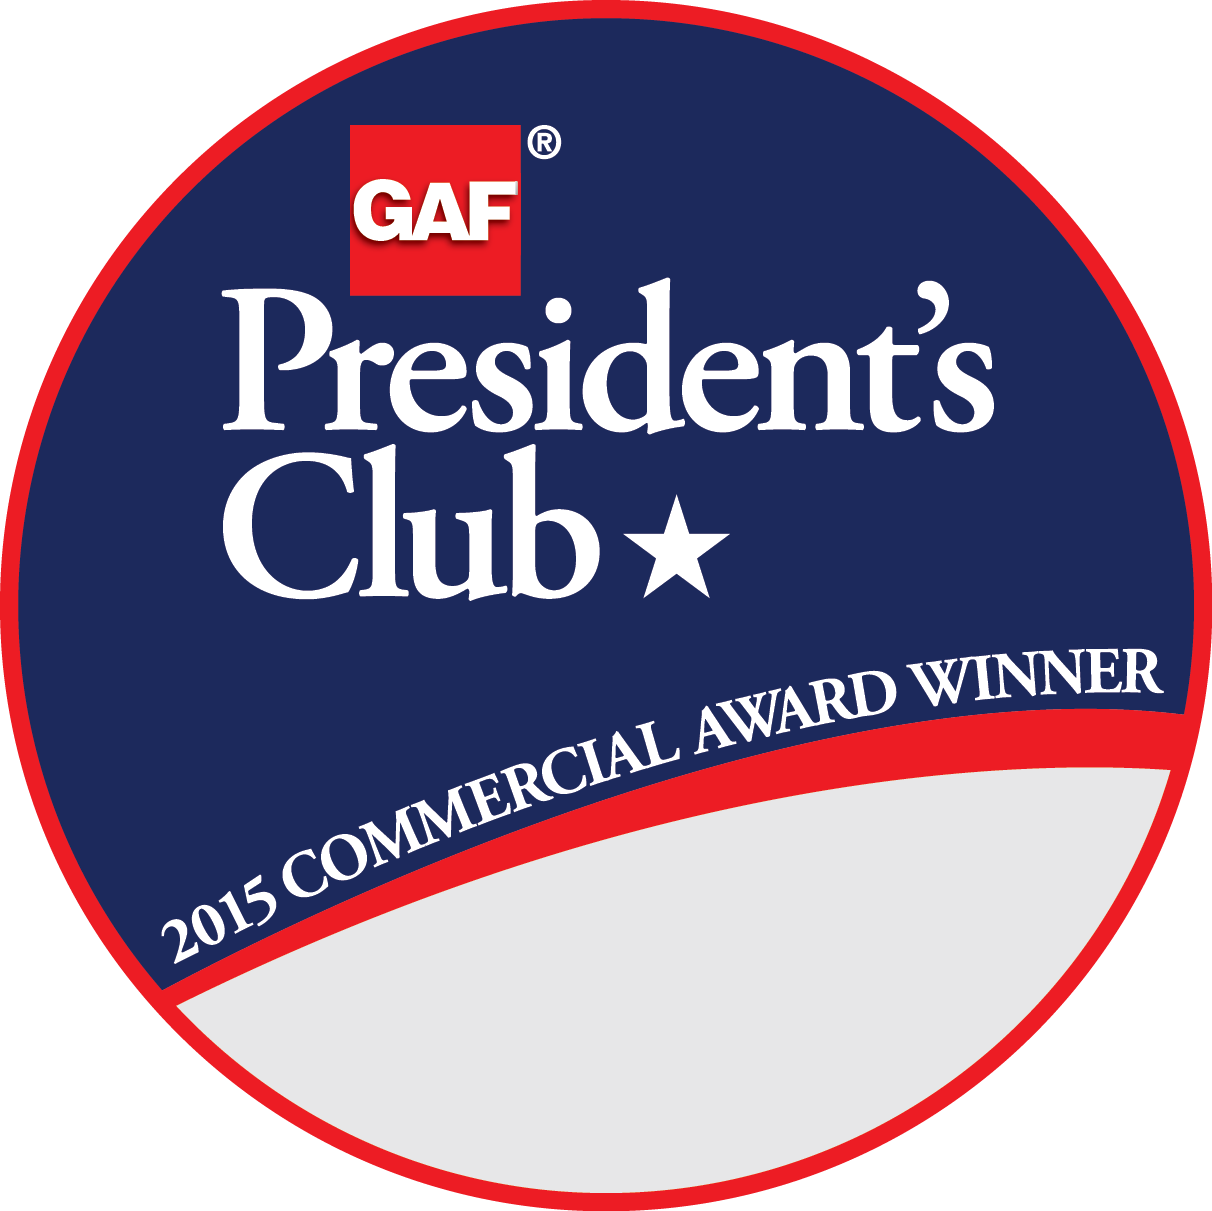 Received the GAF President’s Club Award